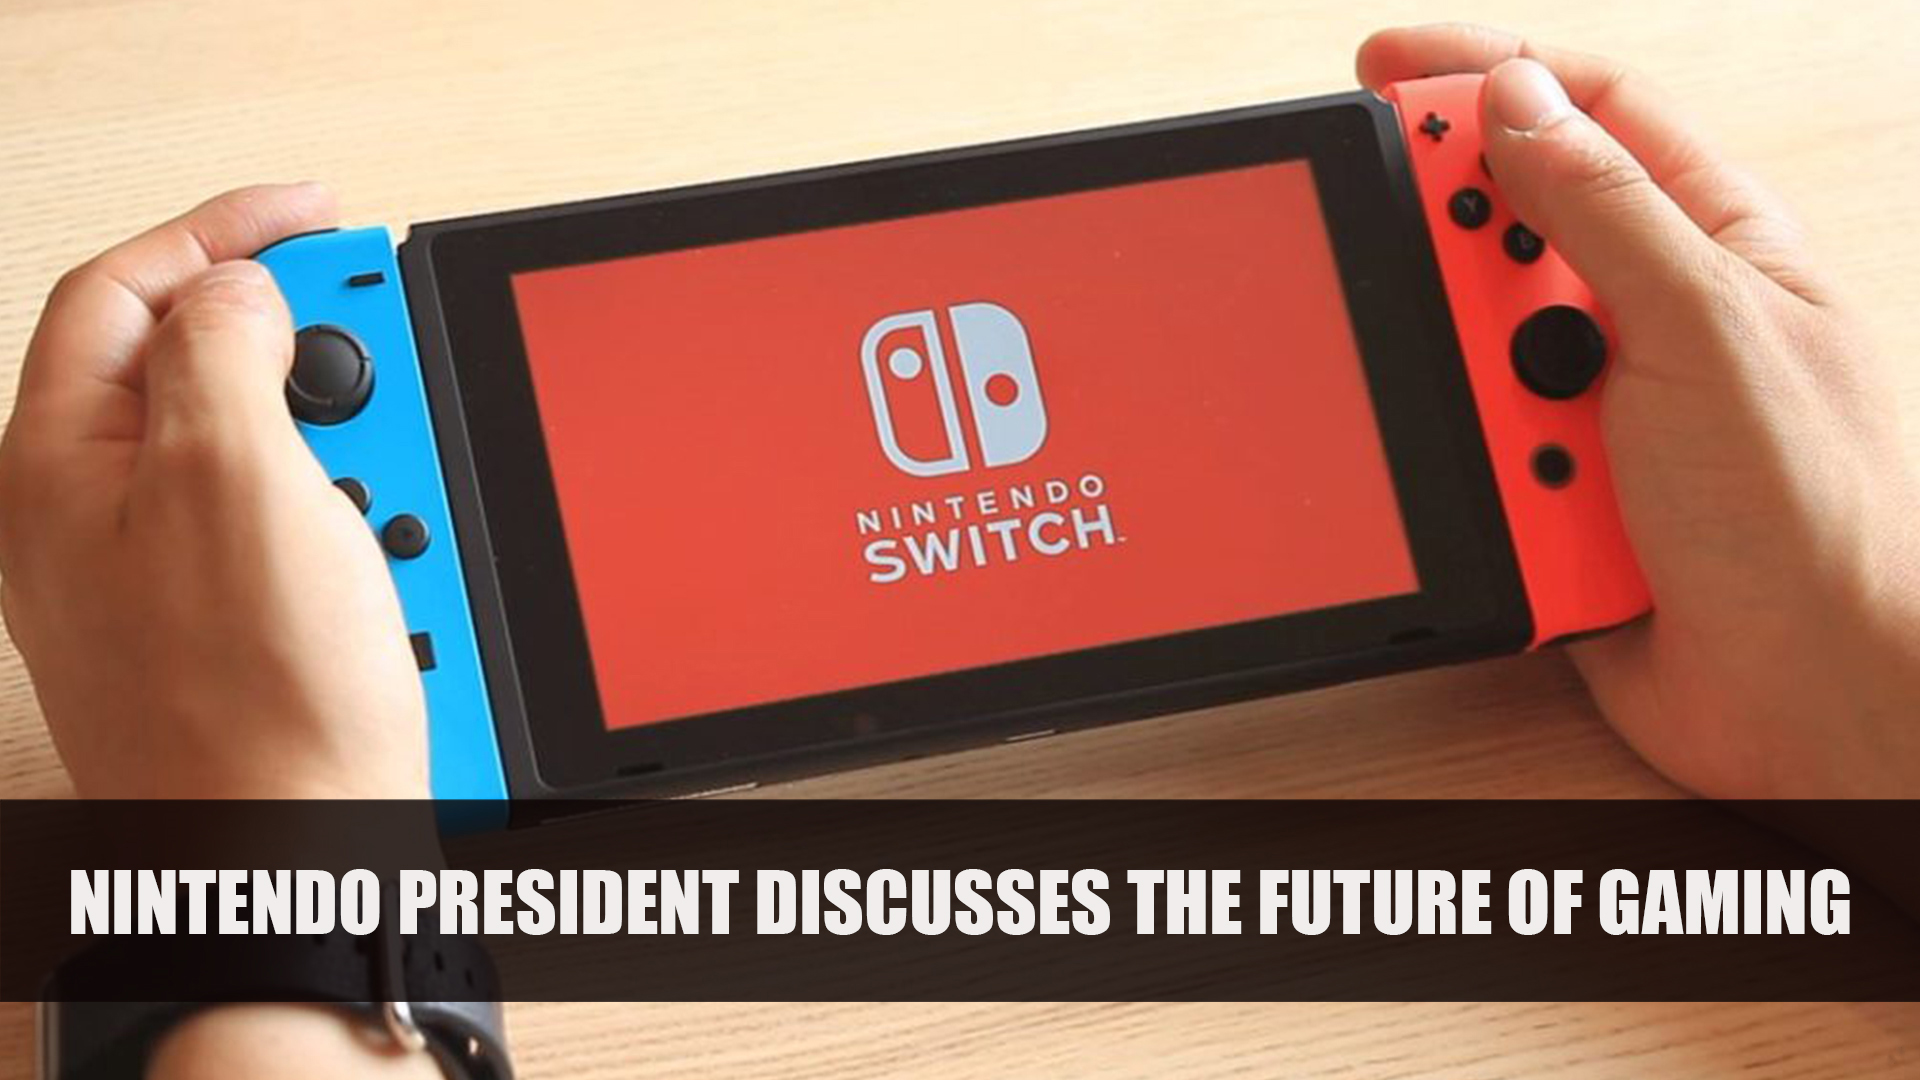 Nintendo switch play play. Нинтендо новая. Nintendo Switch New. Nintendo Switch Prototype. NVIDIA Tegra Nintendo Switch.